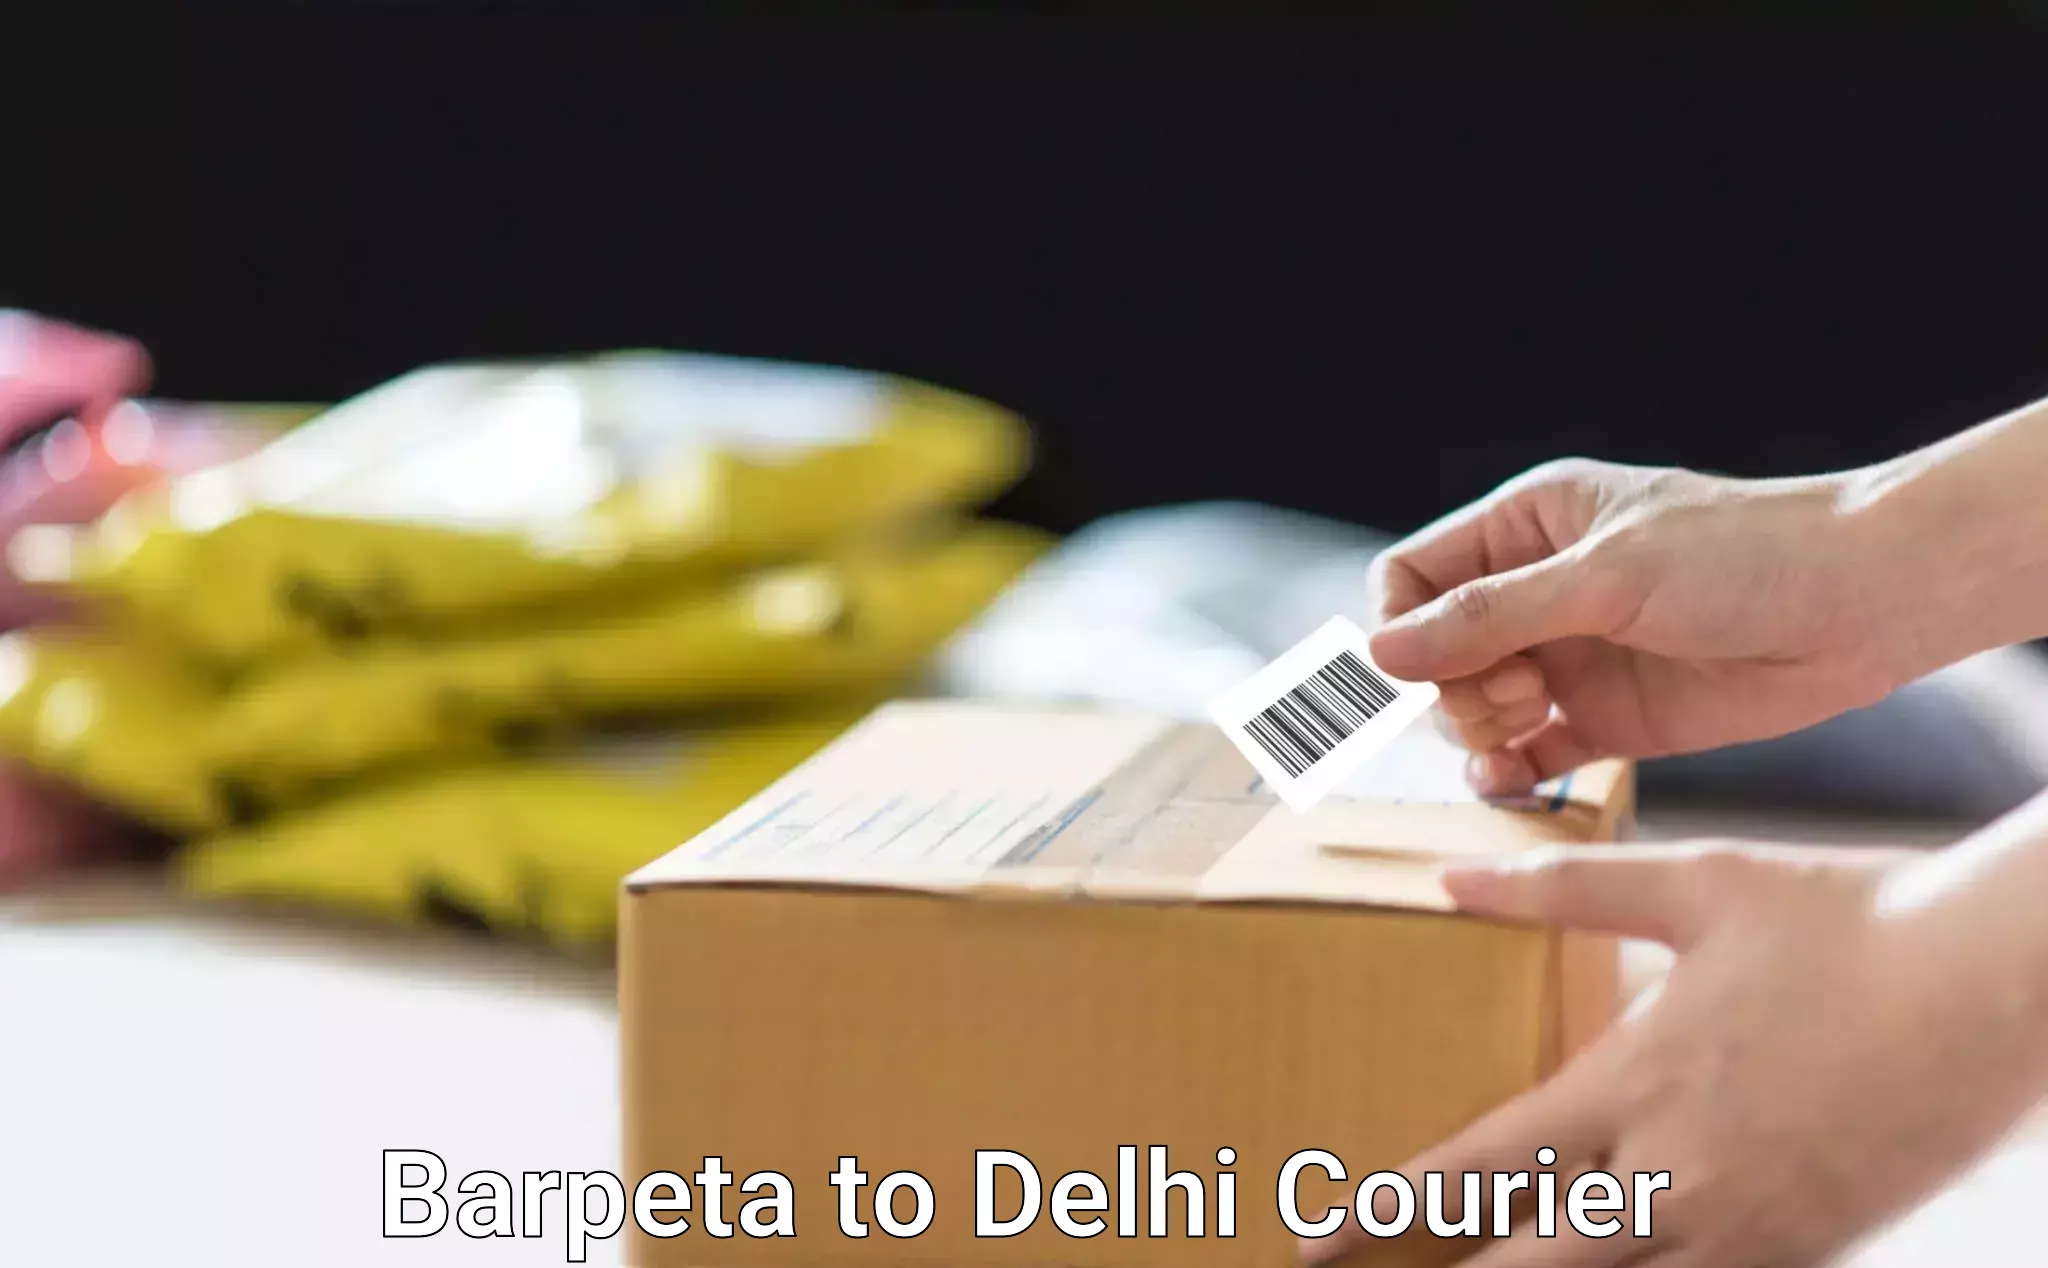 State-of-the-art courier technology Barpeta to Sarojini Nagar